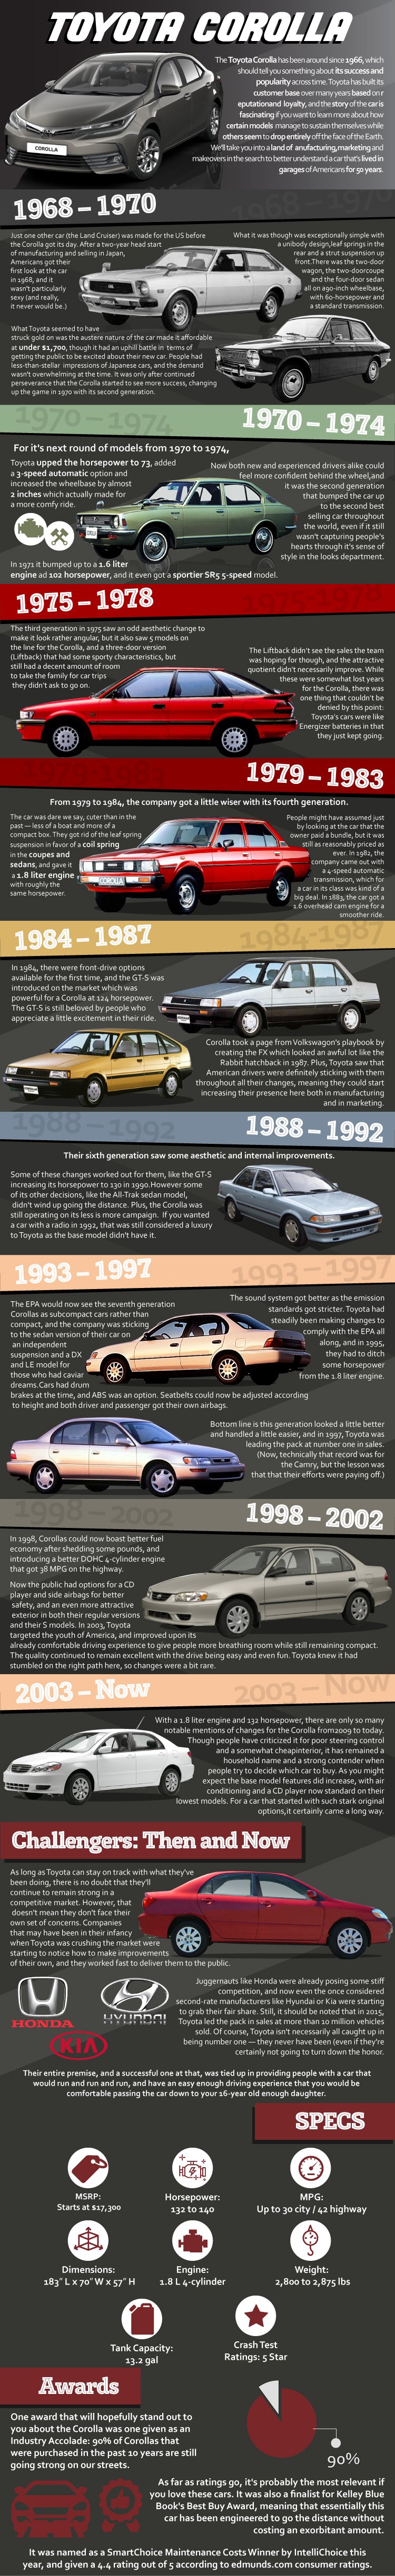 ToyotaCorolla_Infographic